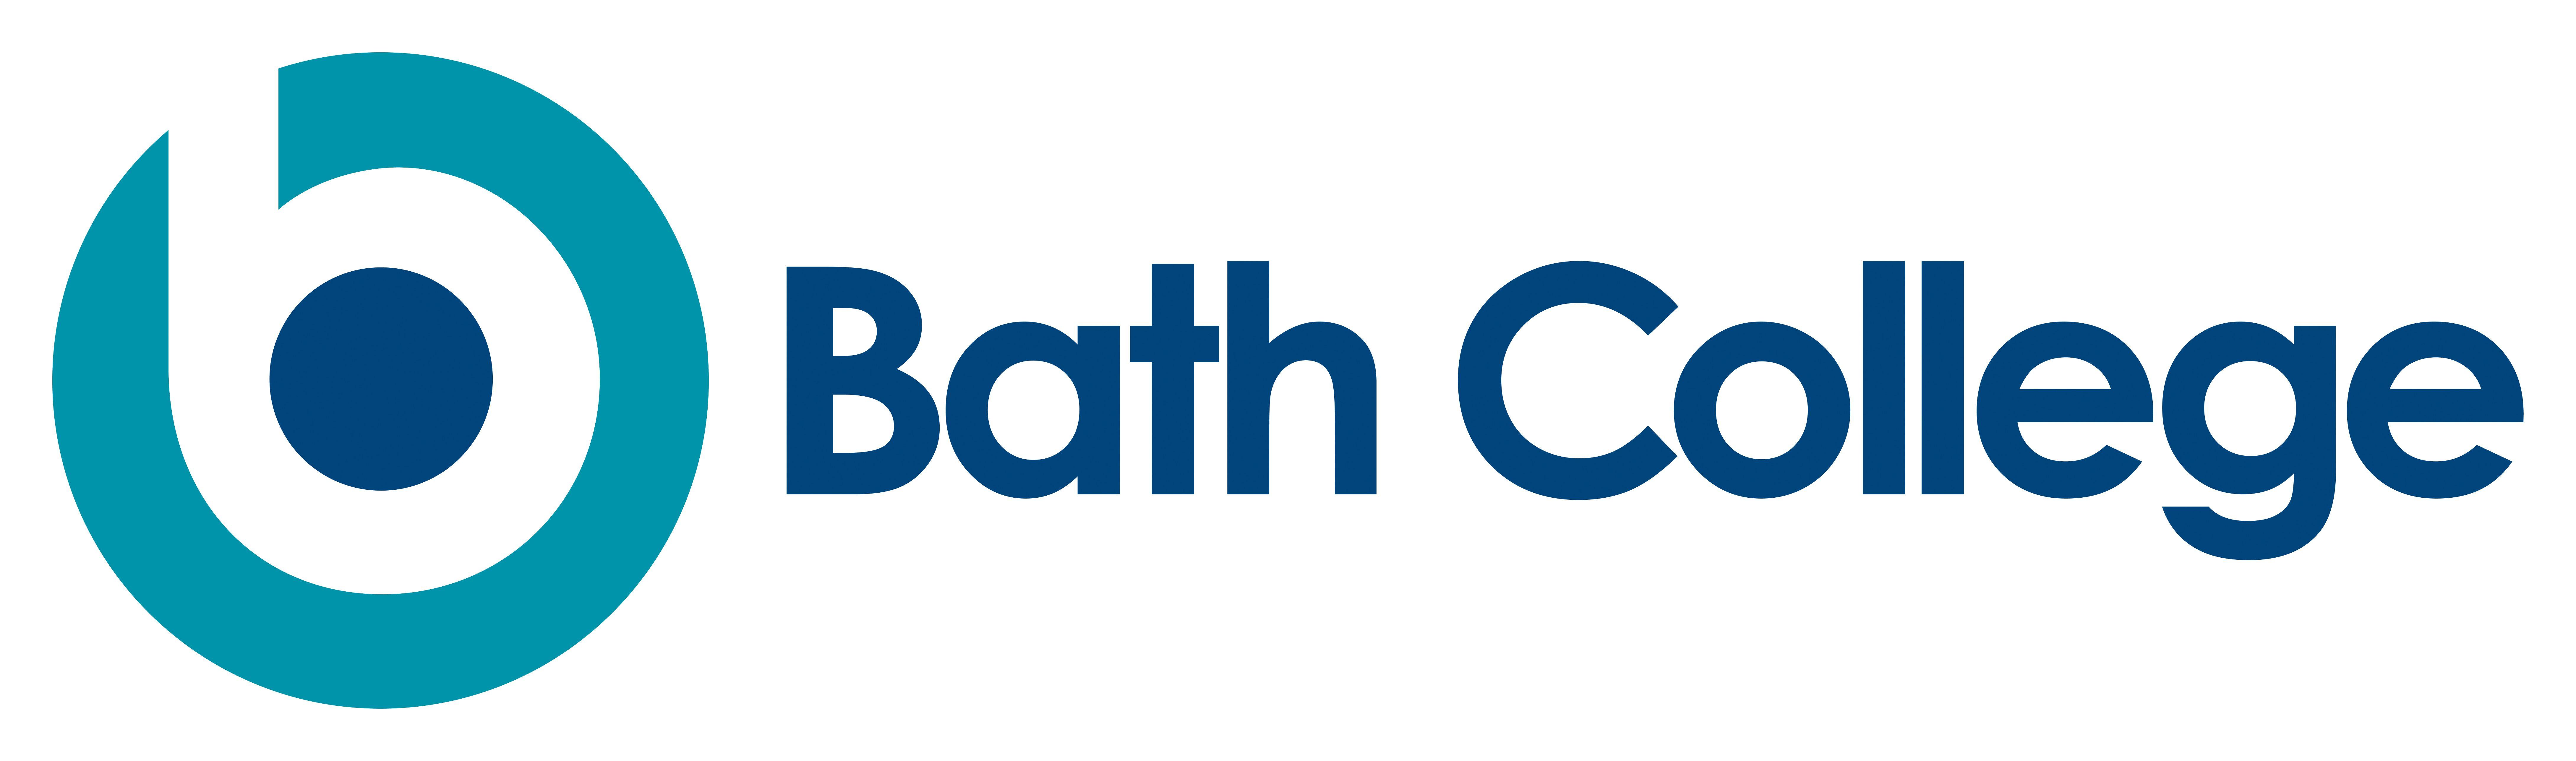 Blue Green College Logo - Bath College Logo CMYK_Normal - Bath College | Bath College